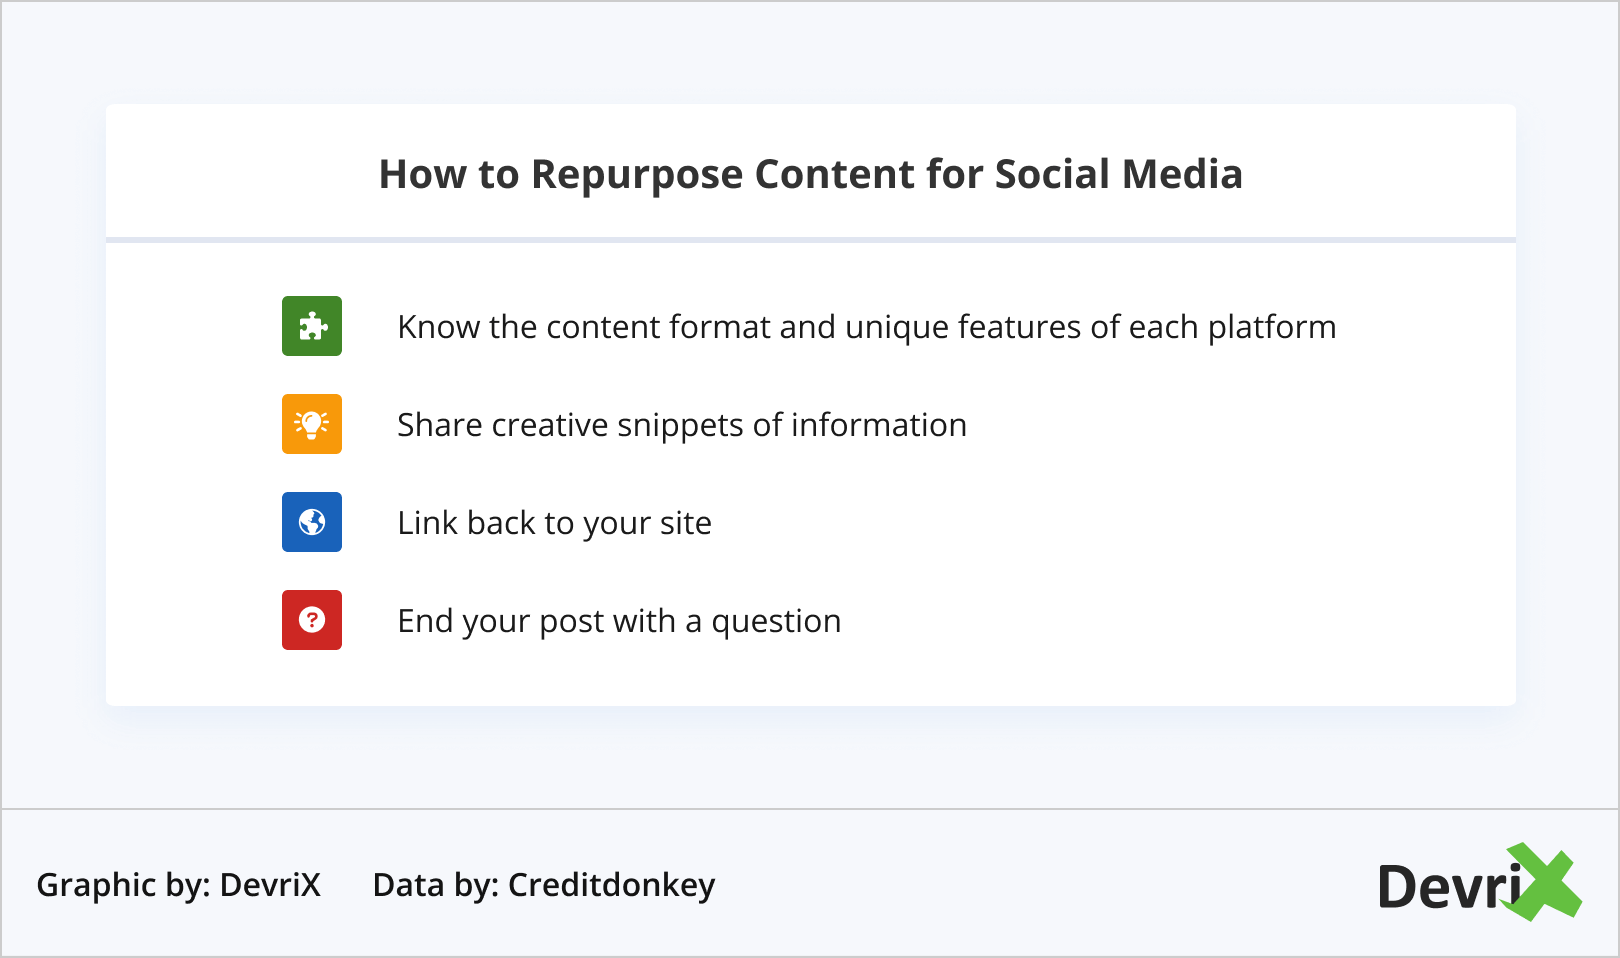 Repurpose Content for Social Media